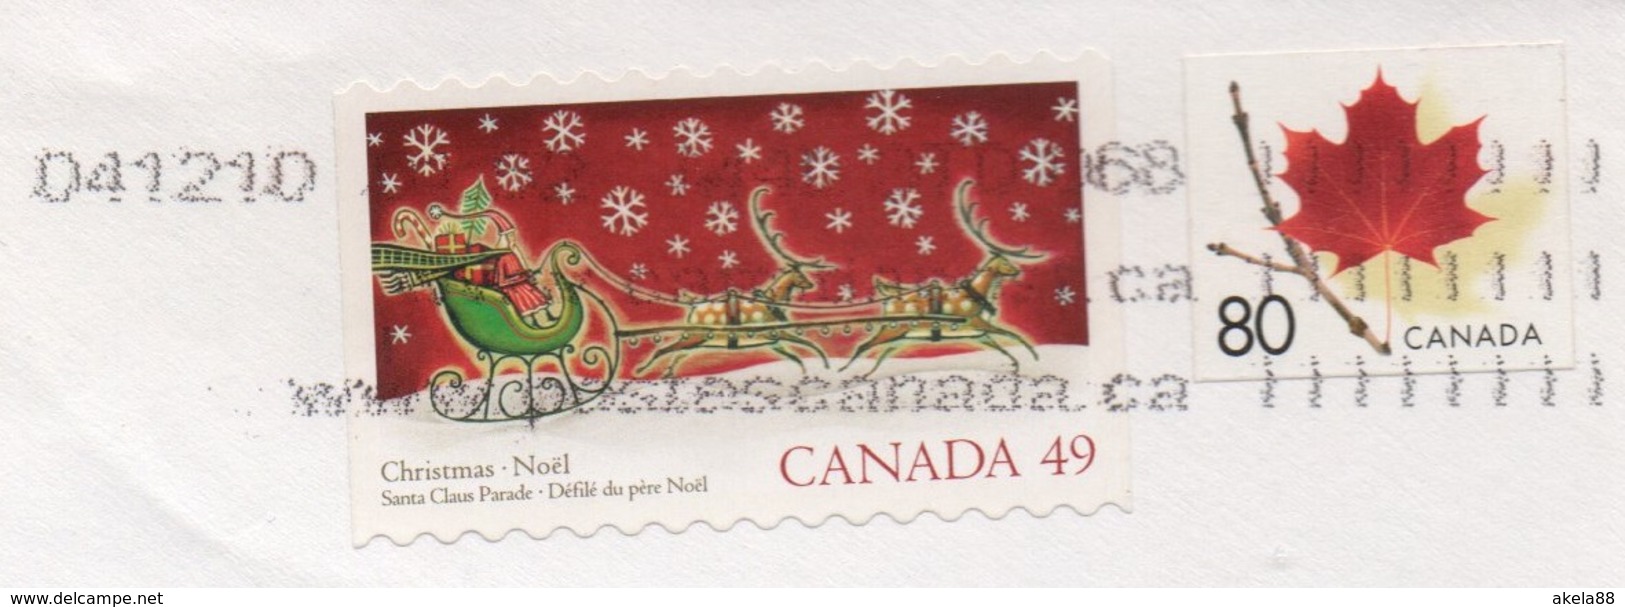 CANADA - BABBO NATALE - ACERO - Postal History